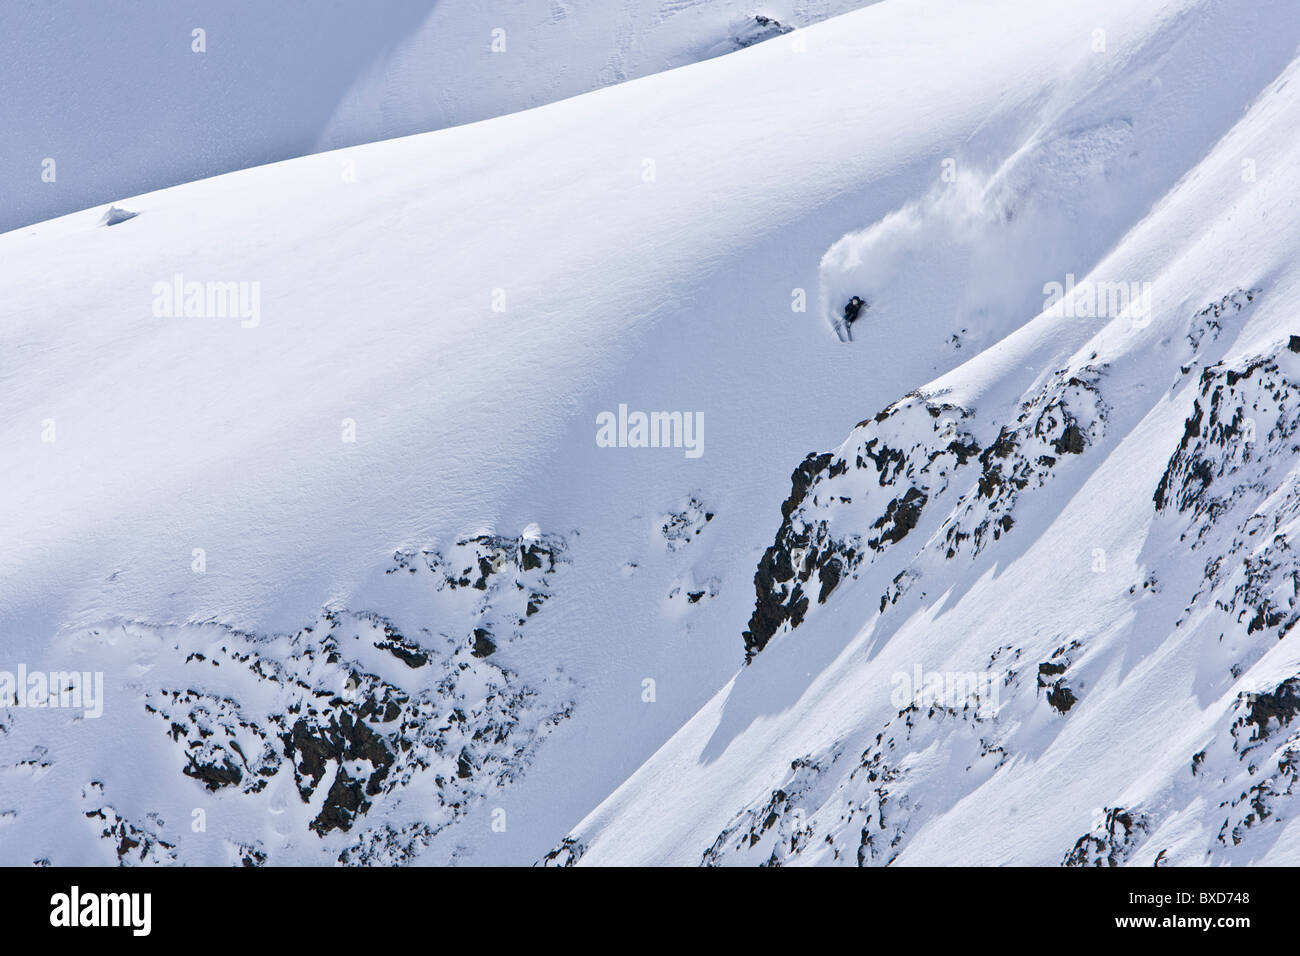 A man skiing in the Stuben, Austria backcountry. Stock Photo